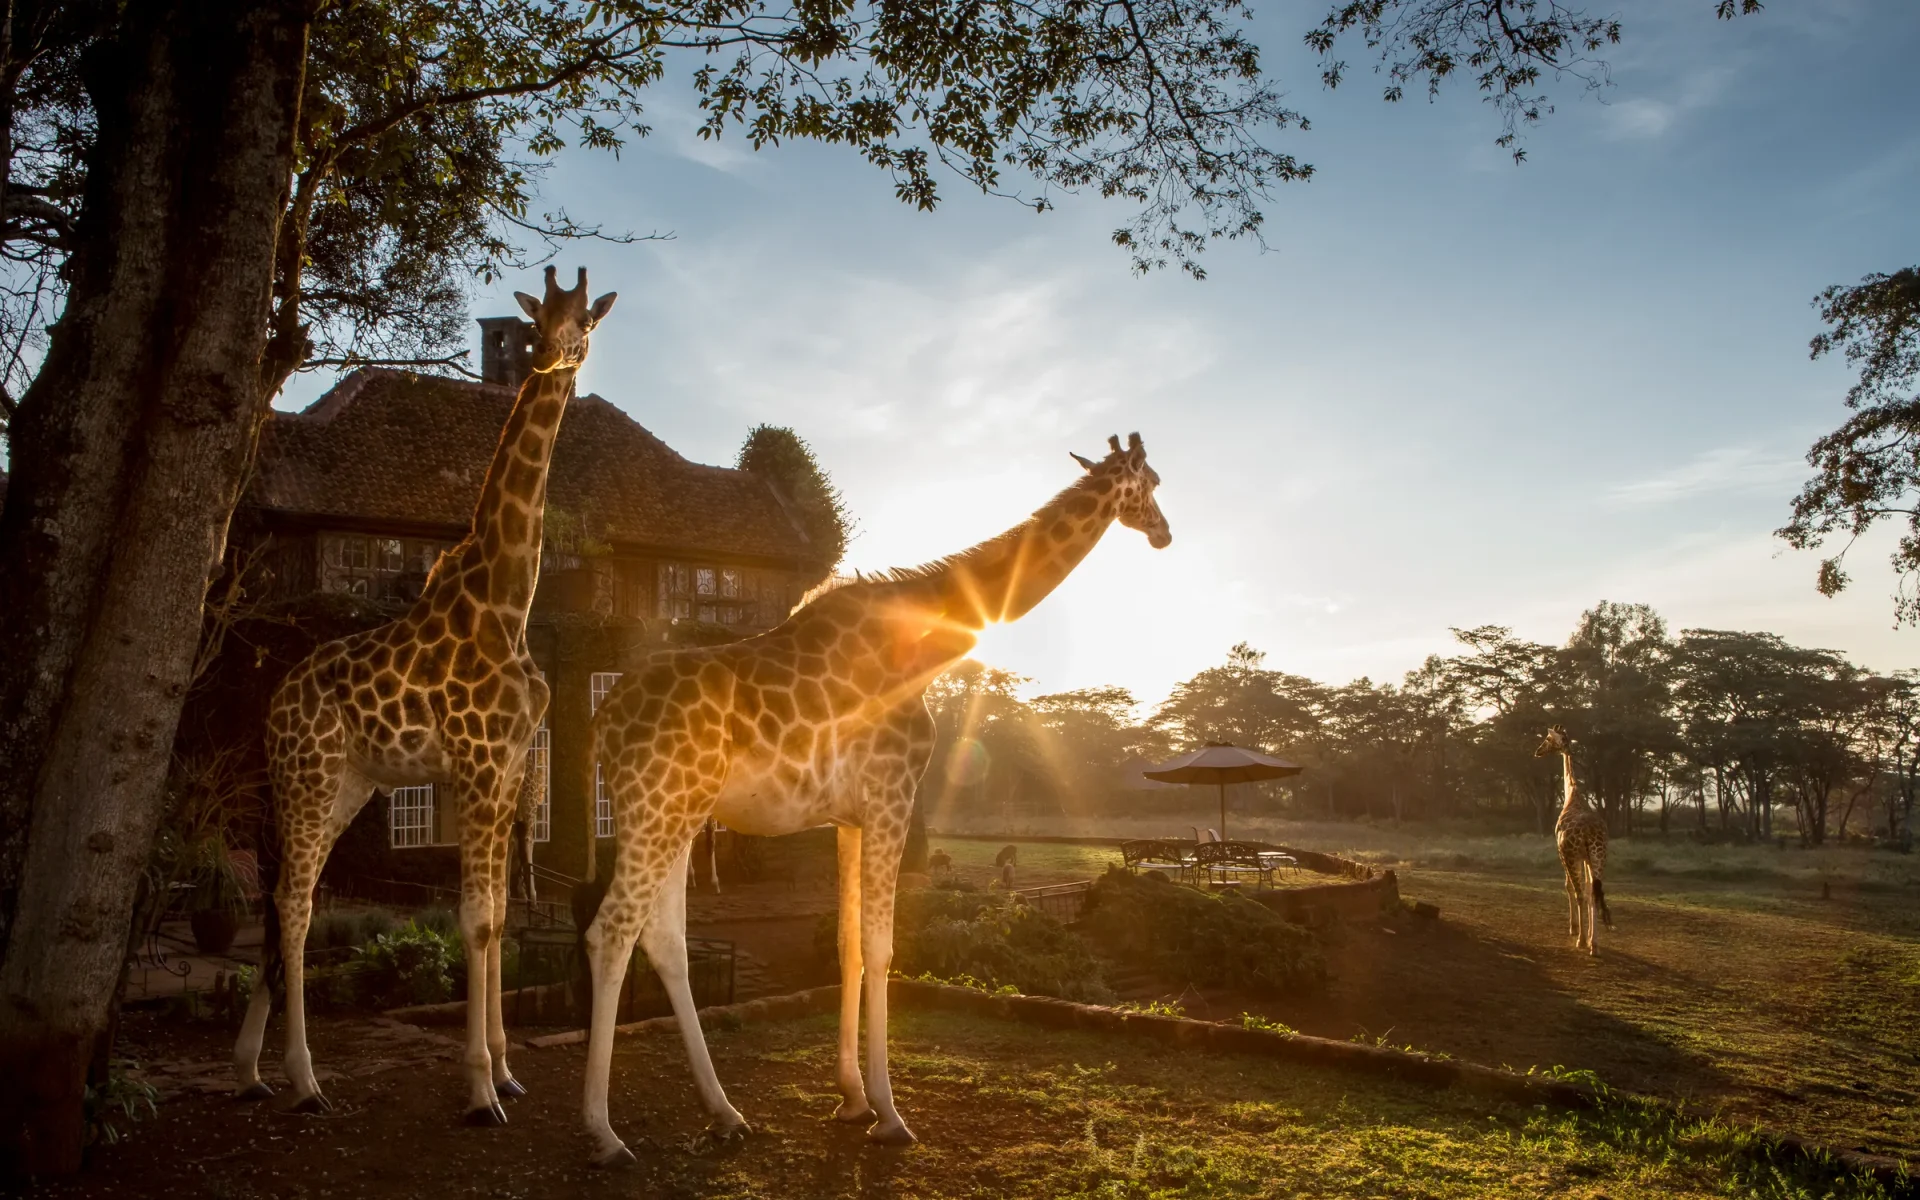 A pair of giraffes wander the green surrounding Giraffe Manor during a sunny day.